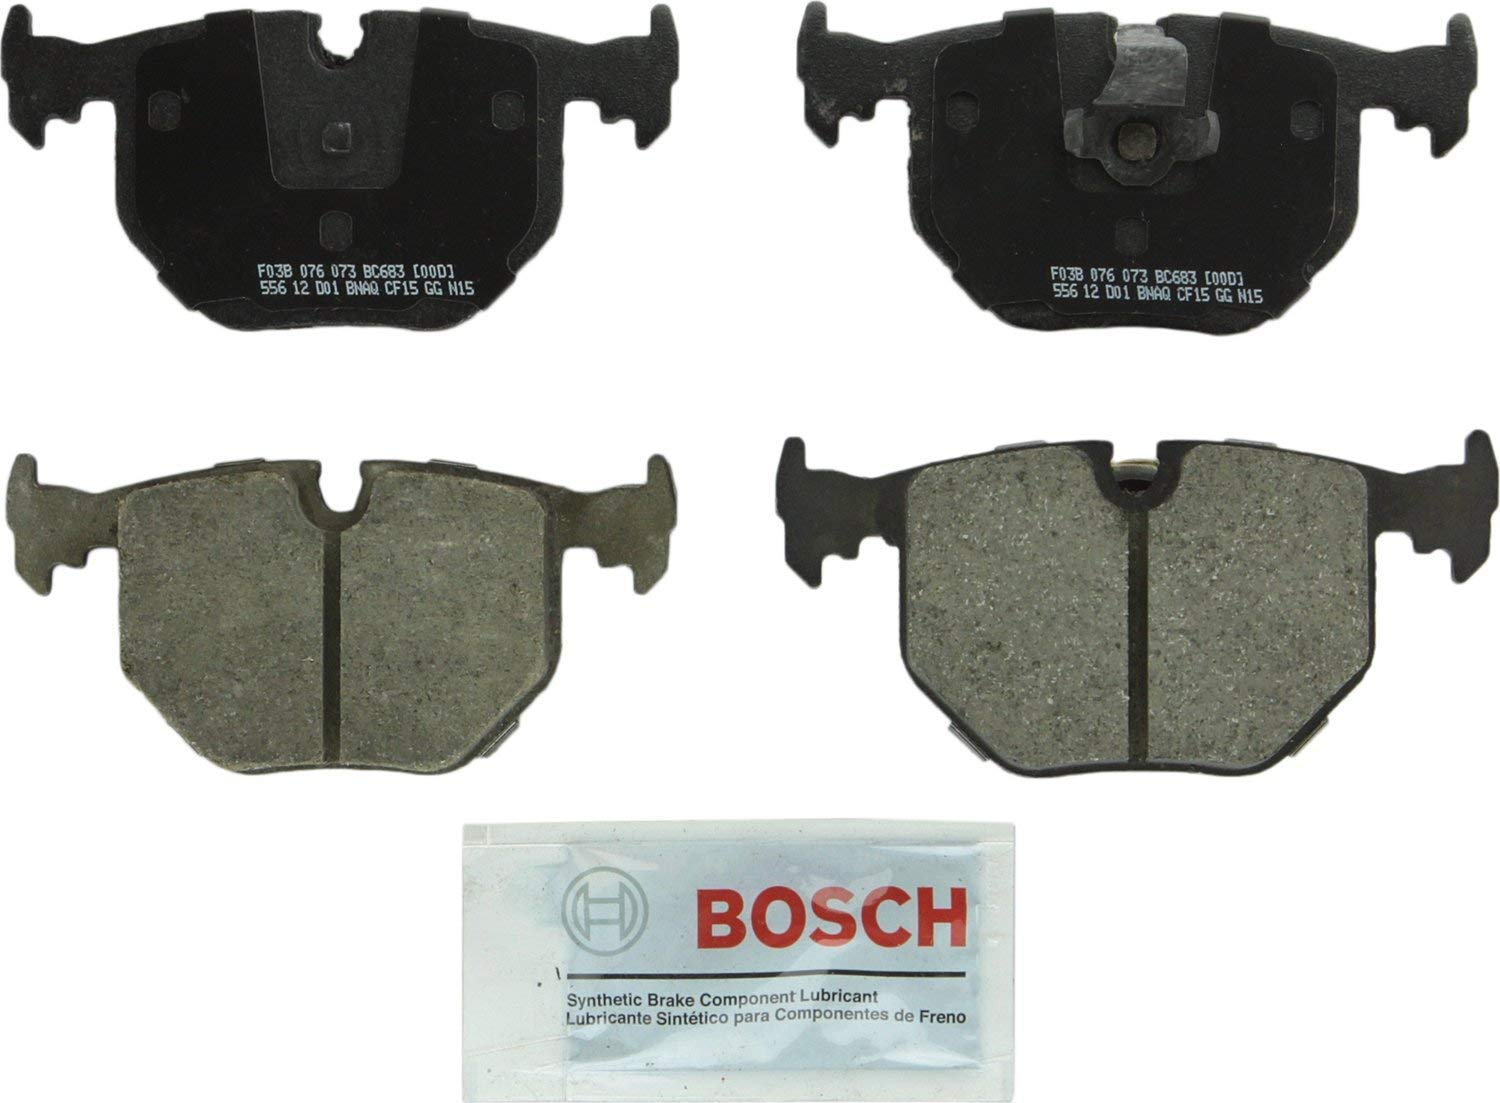 Bosch BC683 QuietCast Premium Ceramic Disc Brake Pad Set For Select BMW 330Ci, 330i, 330xi, 525i, 525xi, 740i, 740iL, 750iL, M3, M5, X3, X5, Z4, Z8; Land Rover Range Rover; Rear